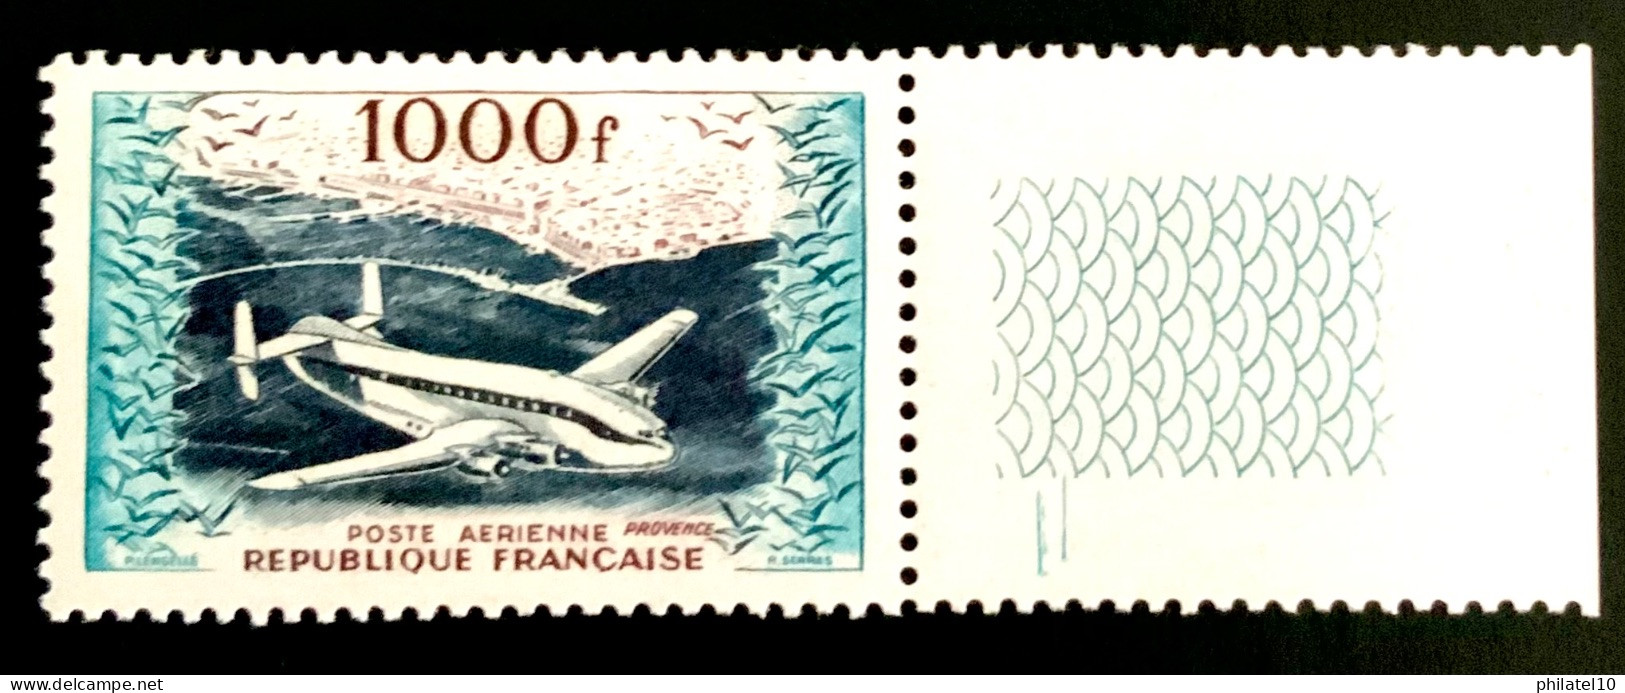 1954 FRANCE N 33 - POSTE AERIENNE LE PROVENCE 1000f - NEUF** - 1927-1959 Postfris